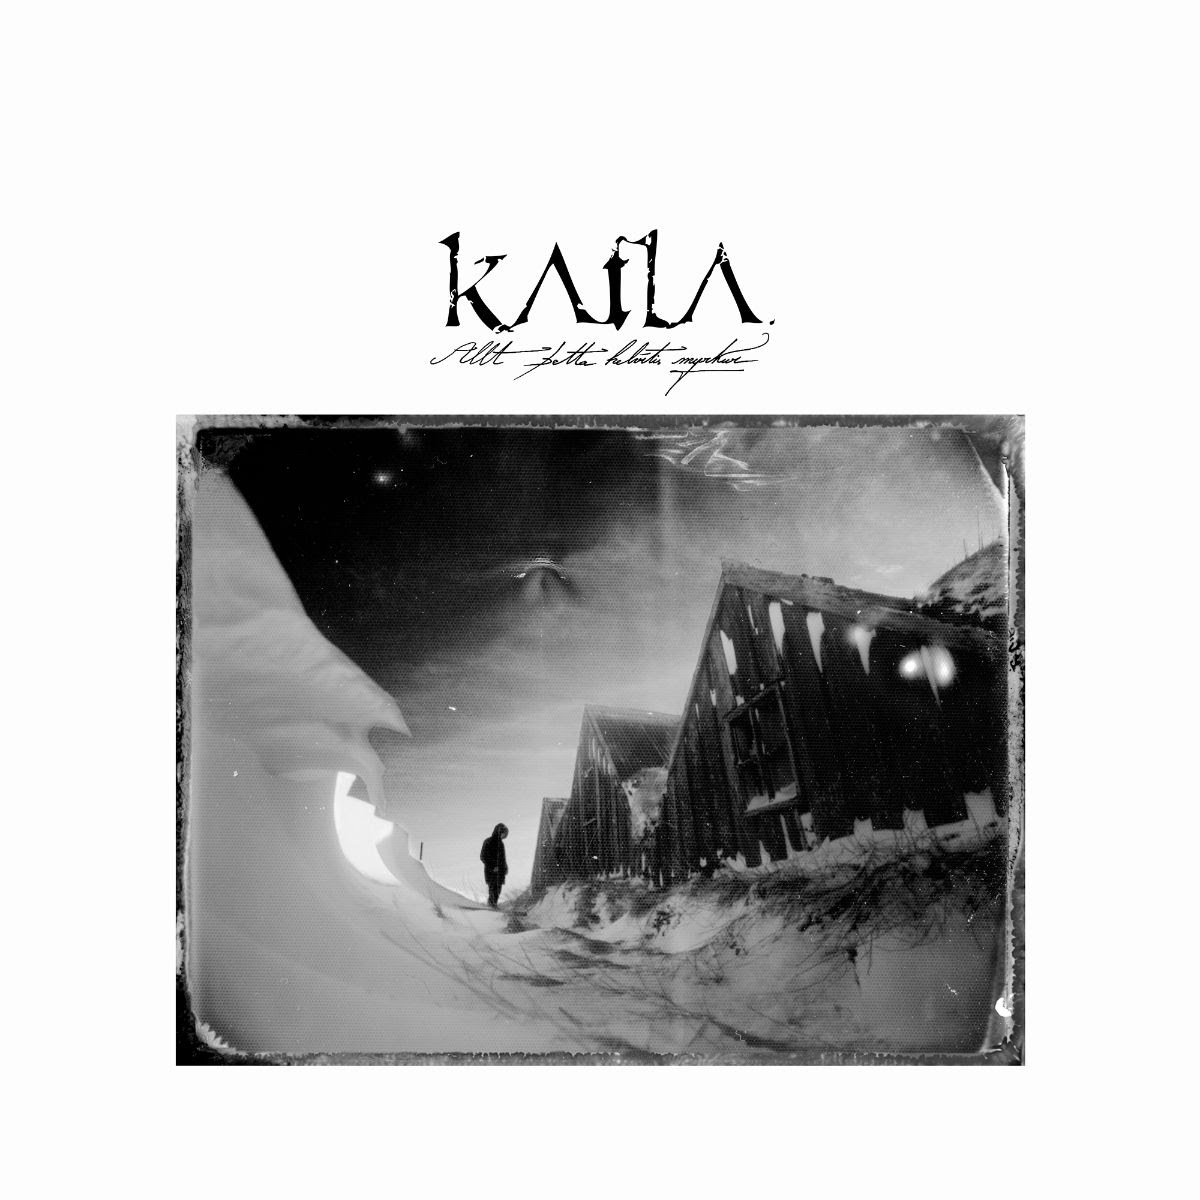 KATLA album cover